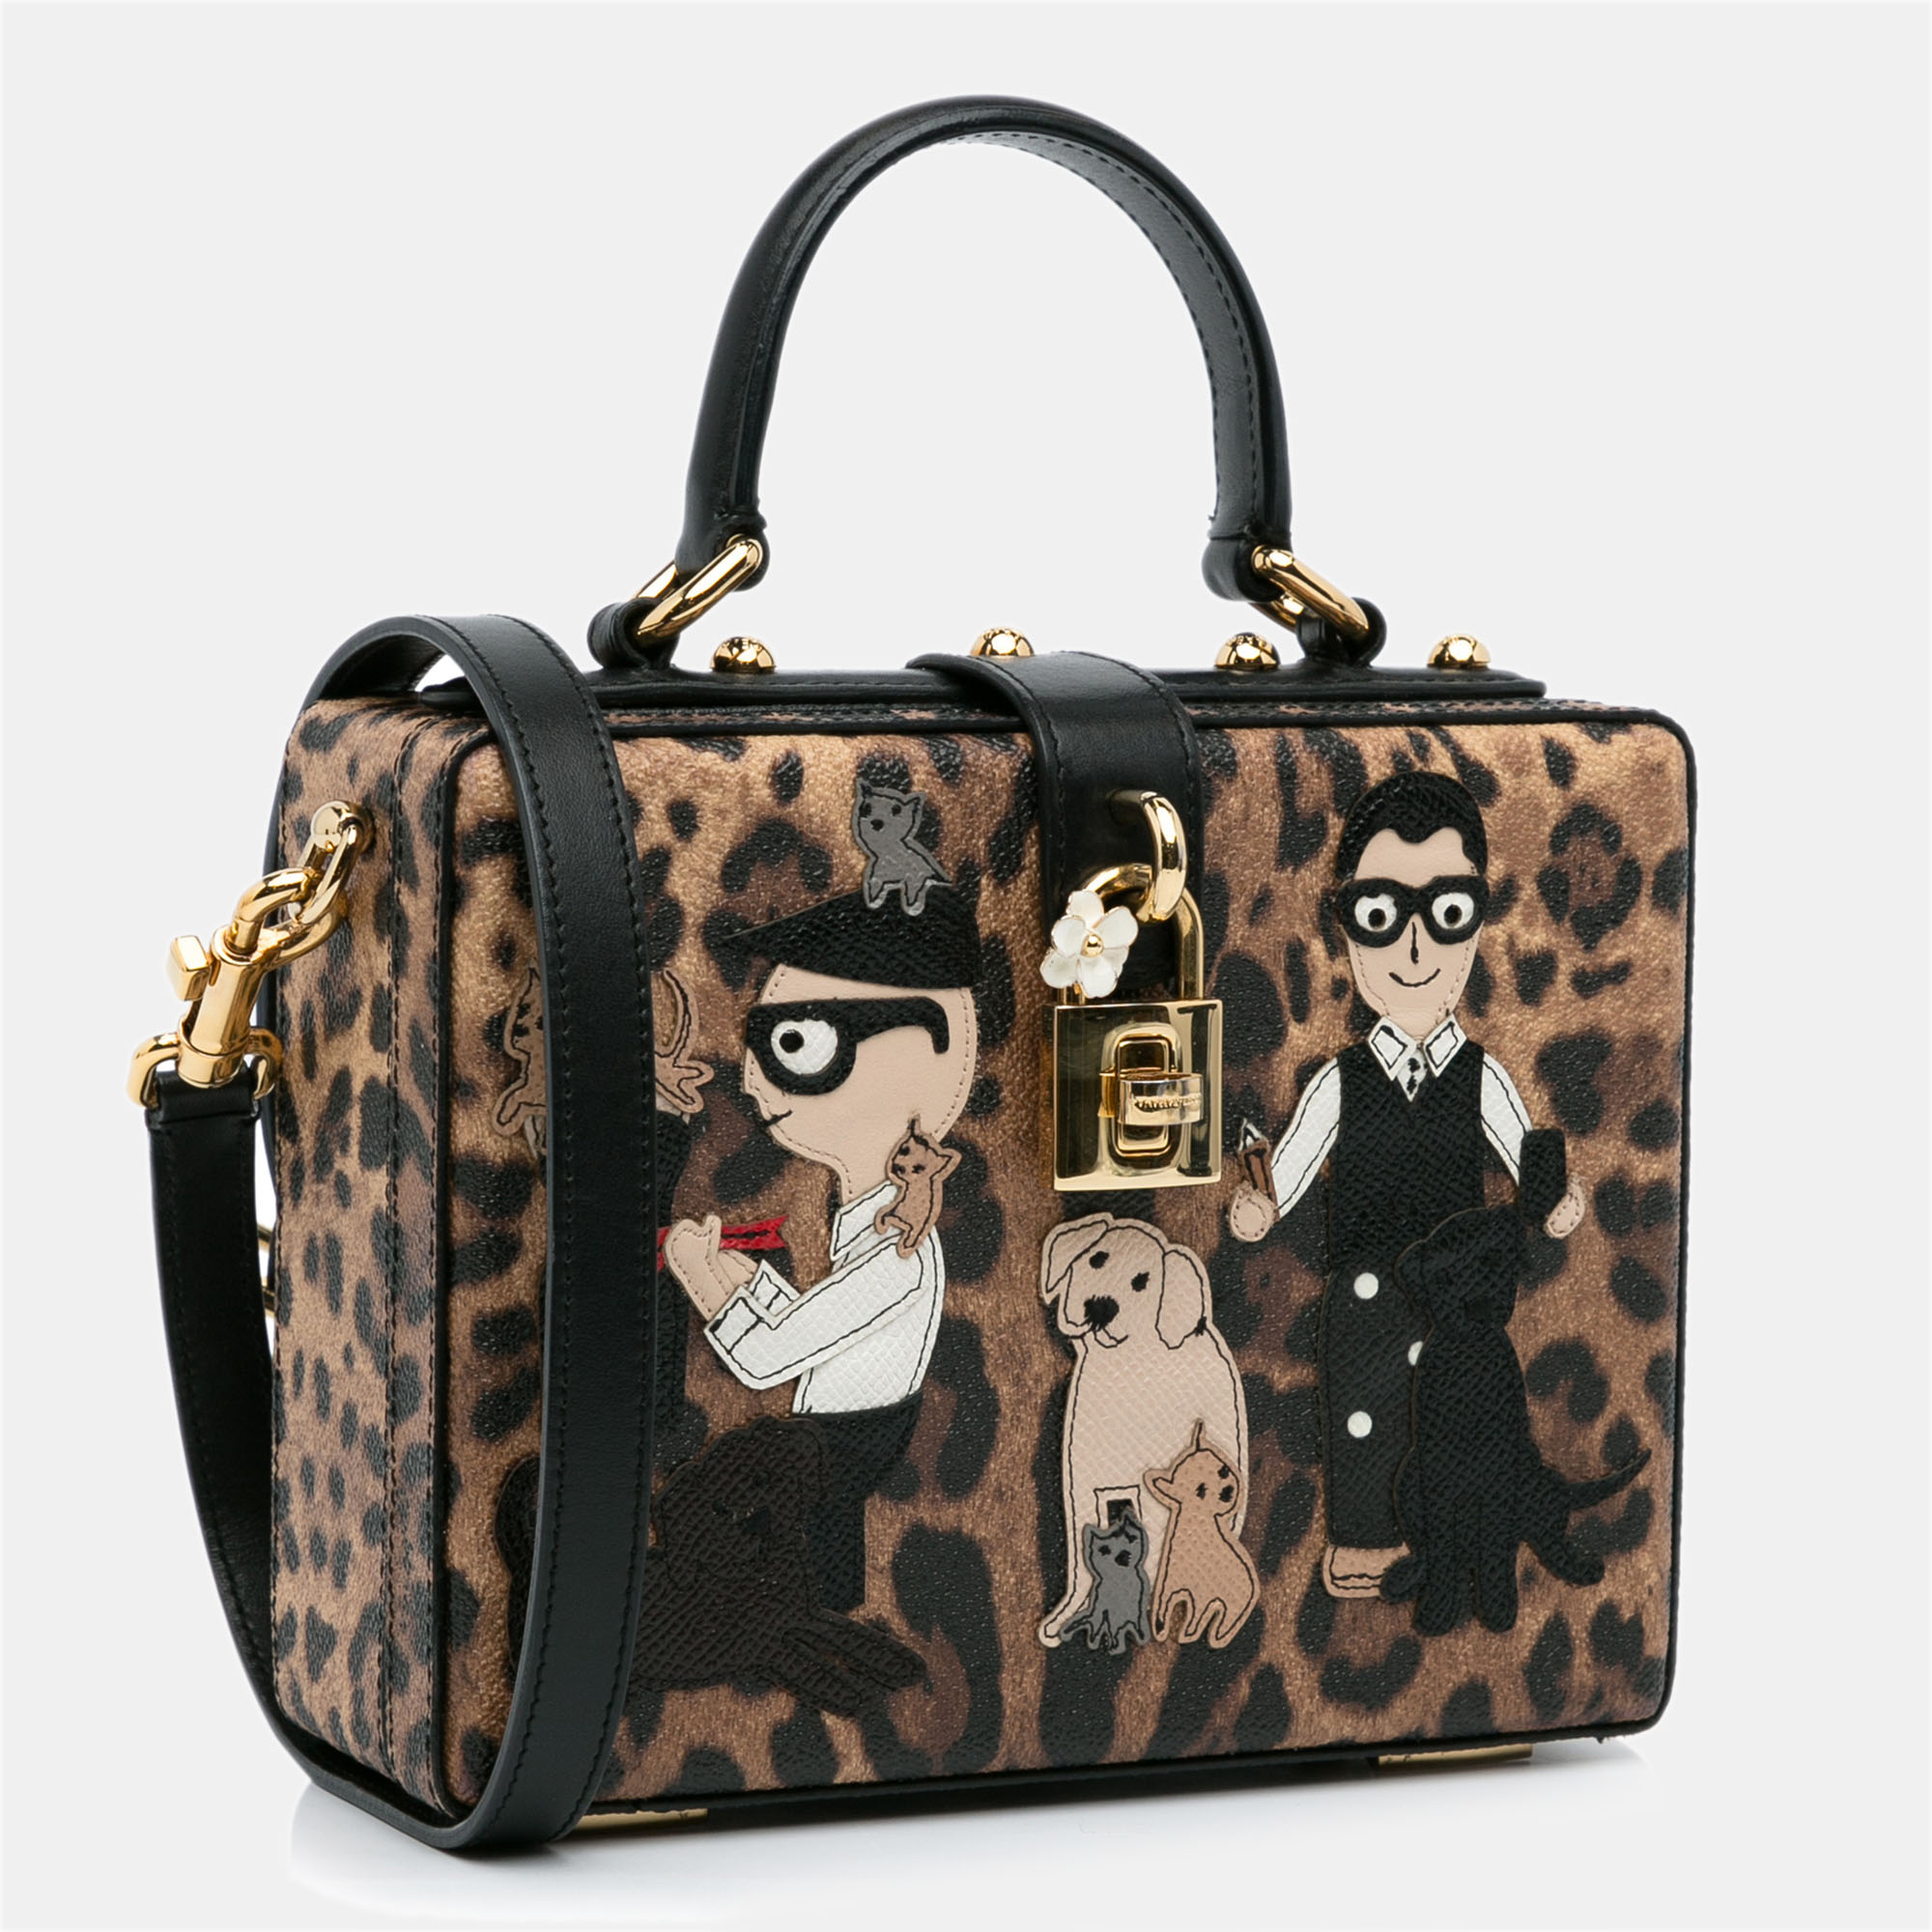 Dolce & Gabbana Leopard Embroidered Box Satchel